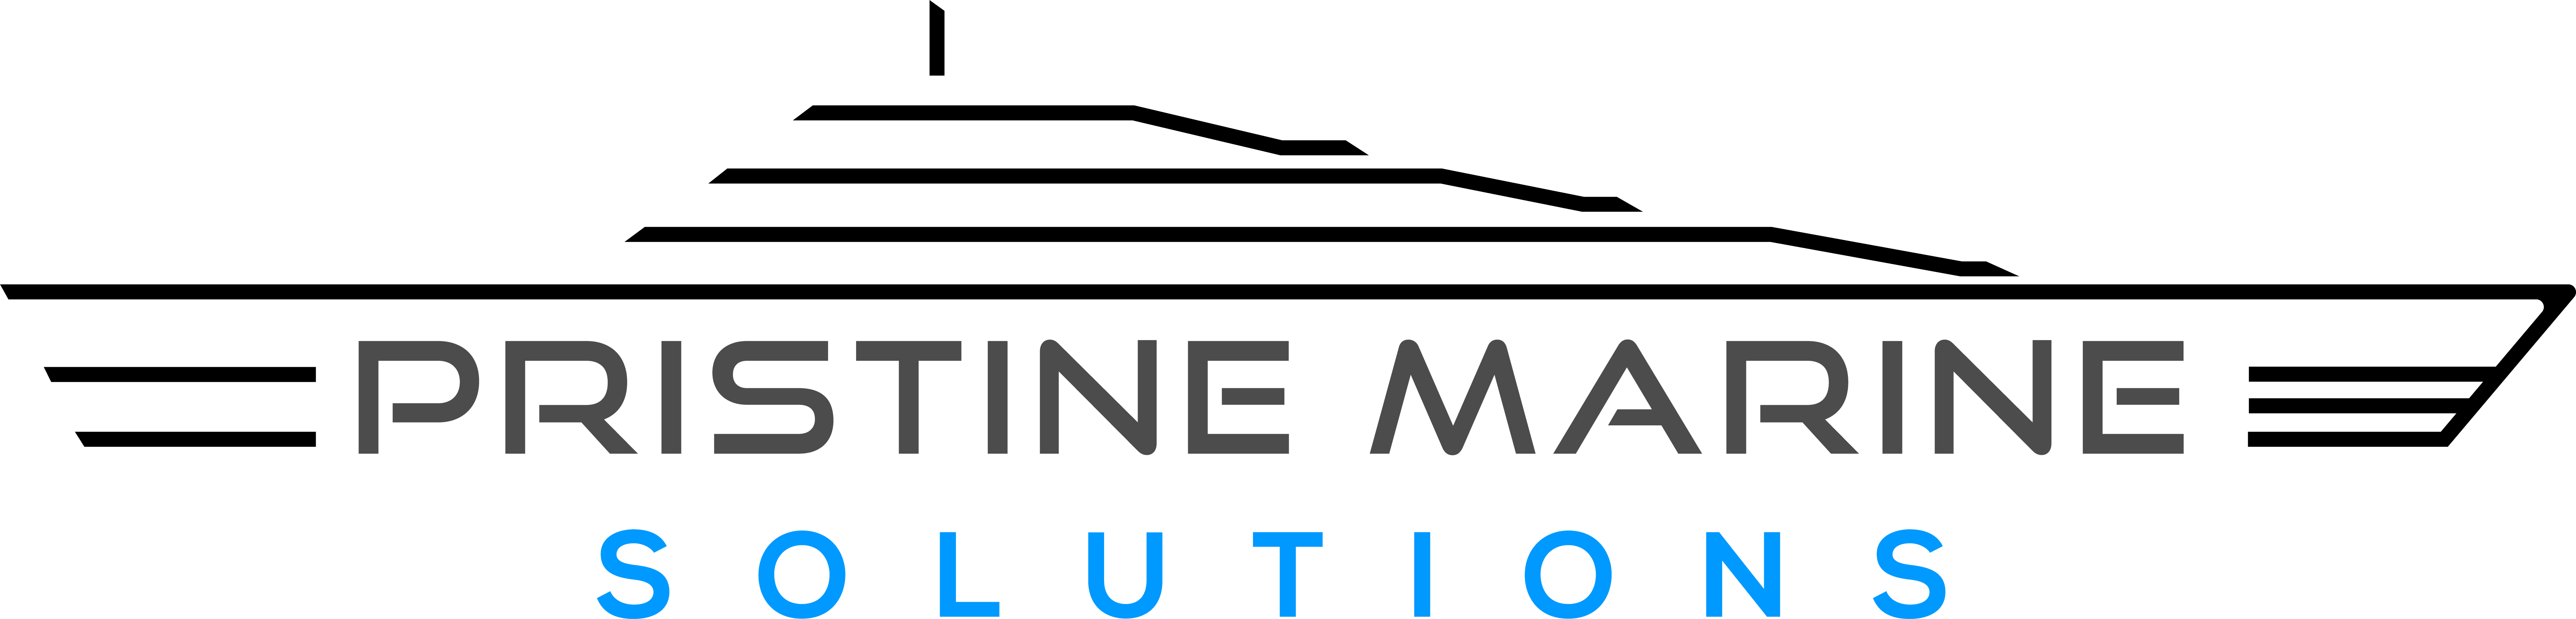 pristine marine Solutions logo small